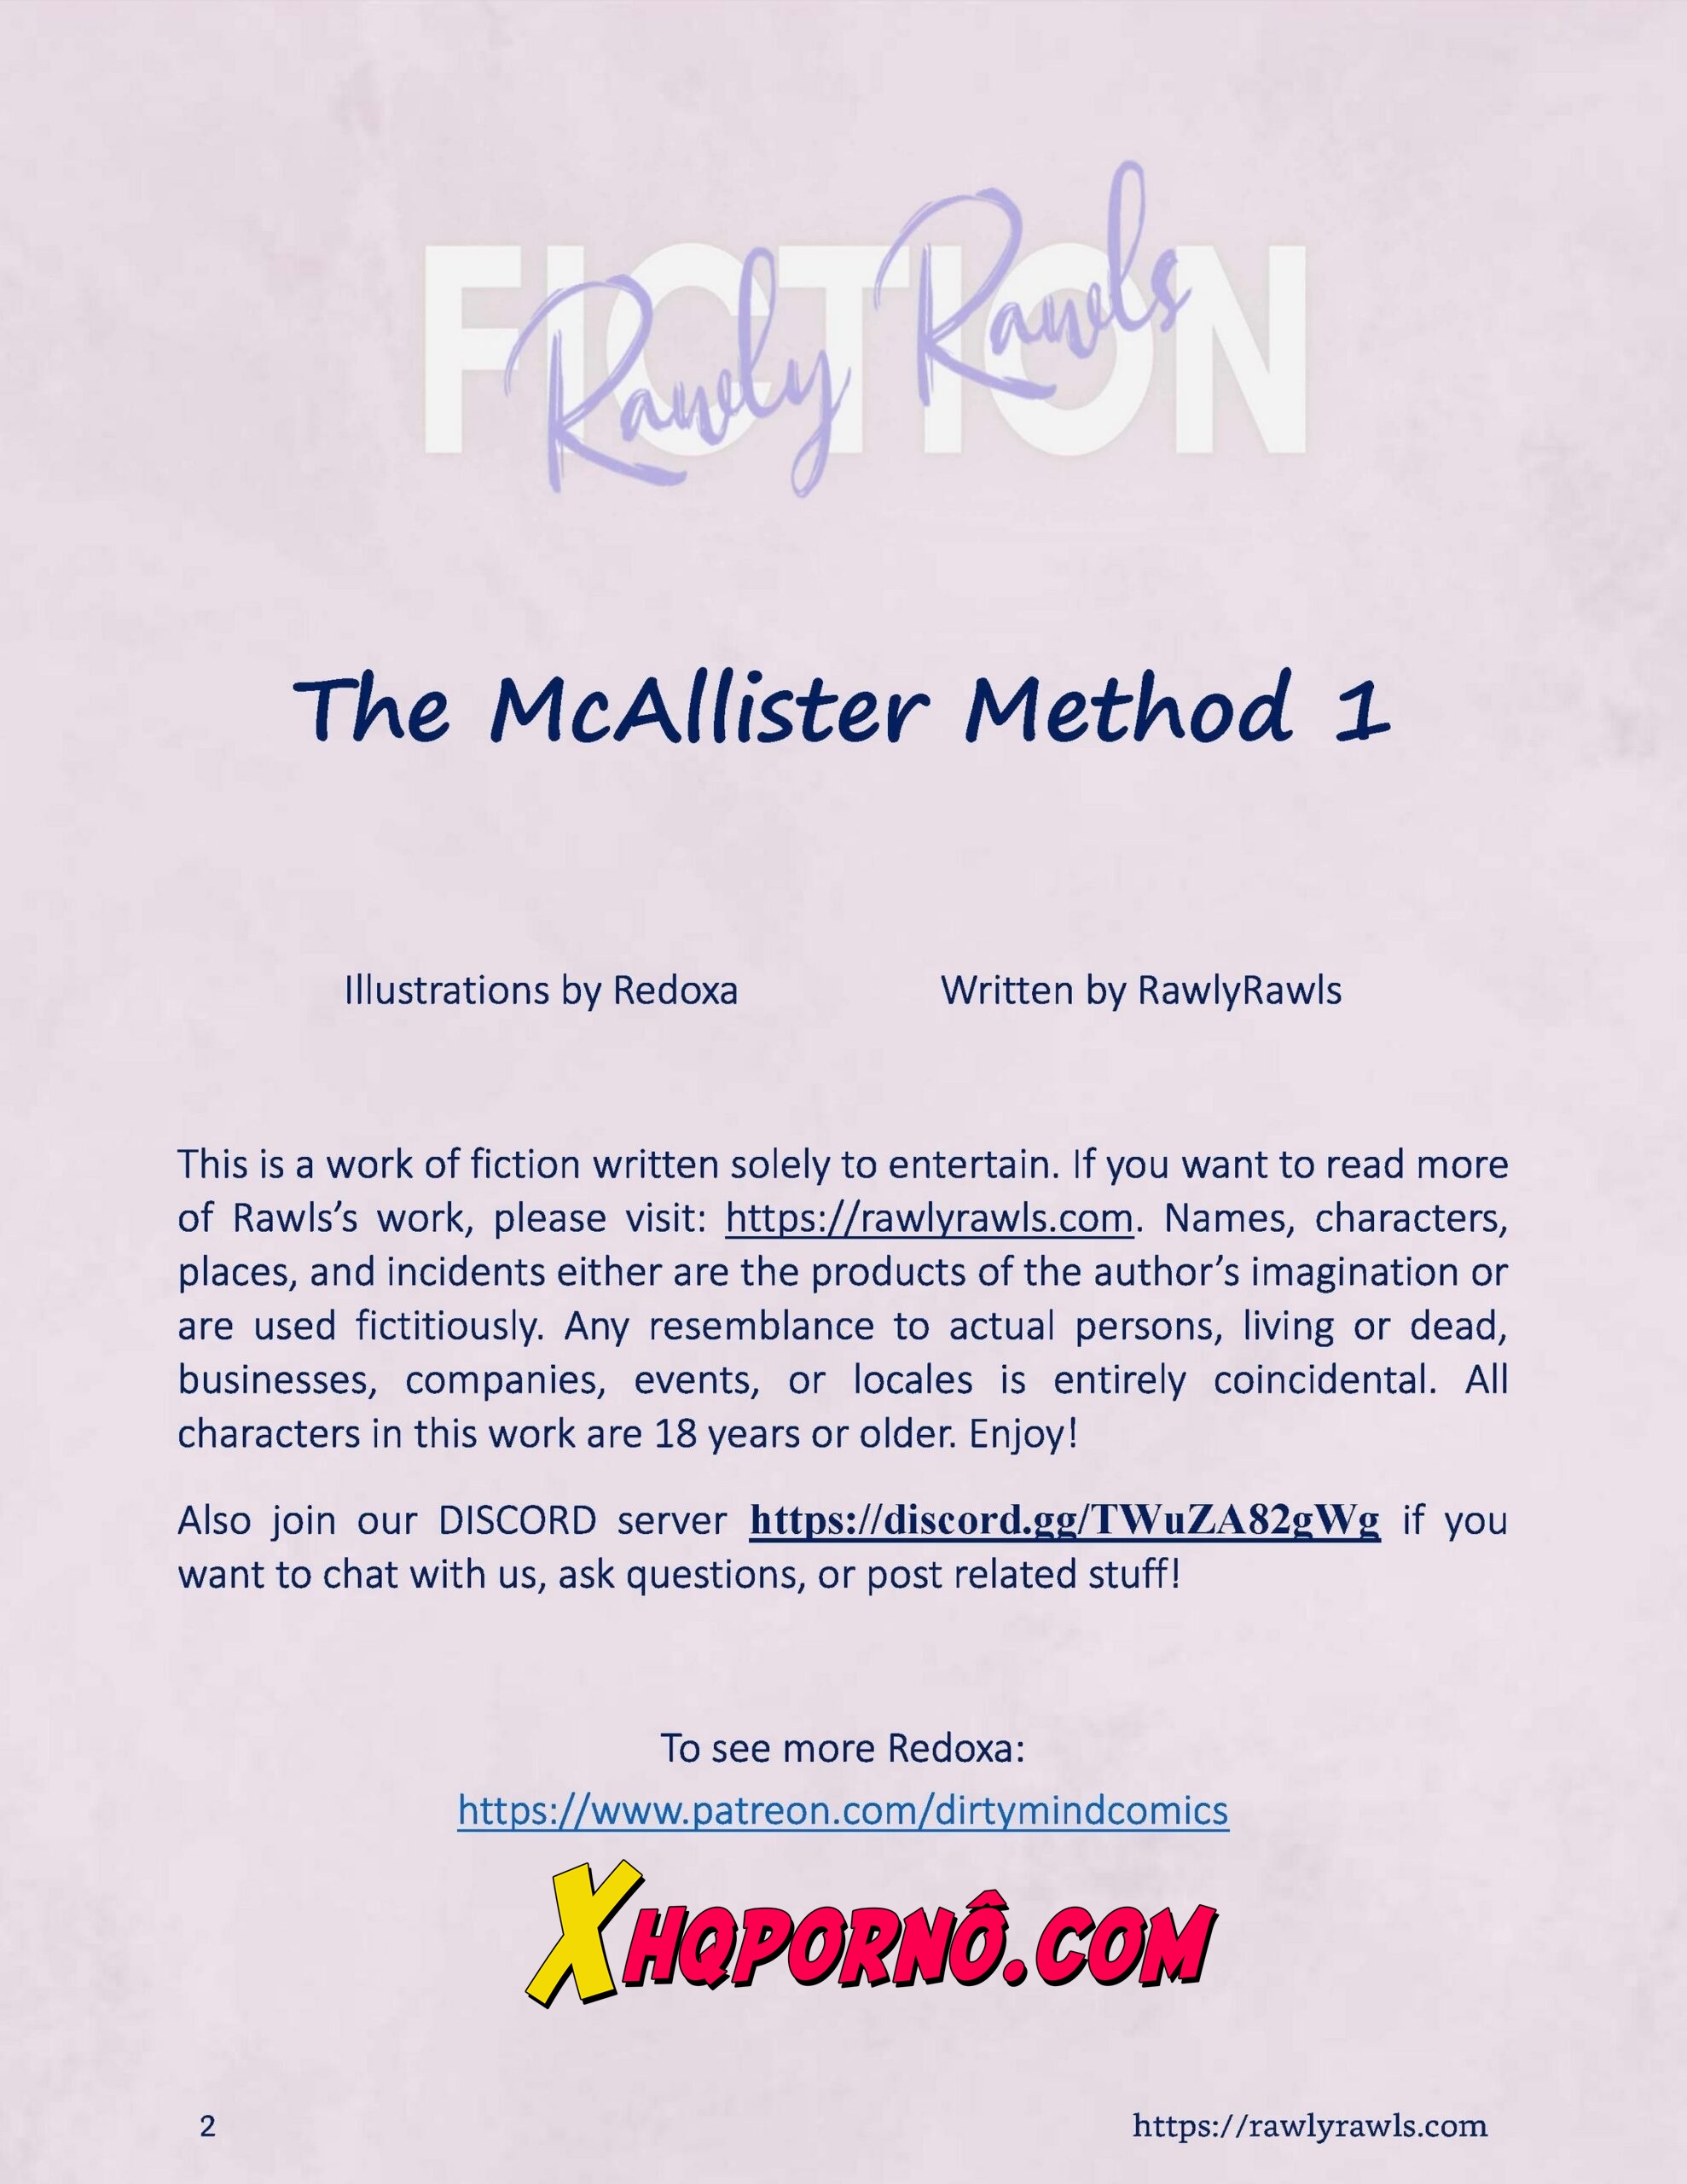 The mcallister method